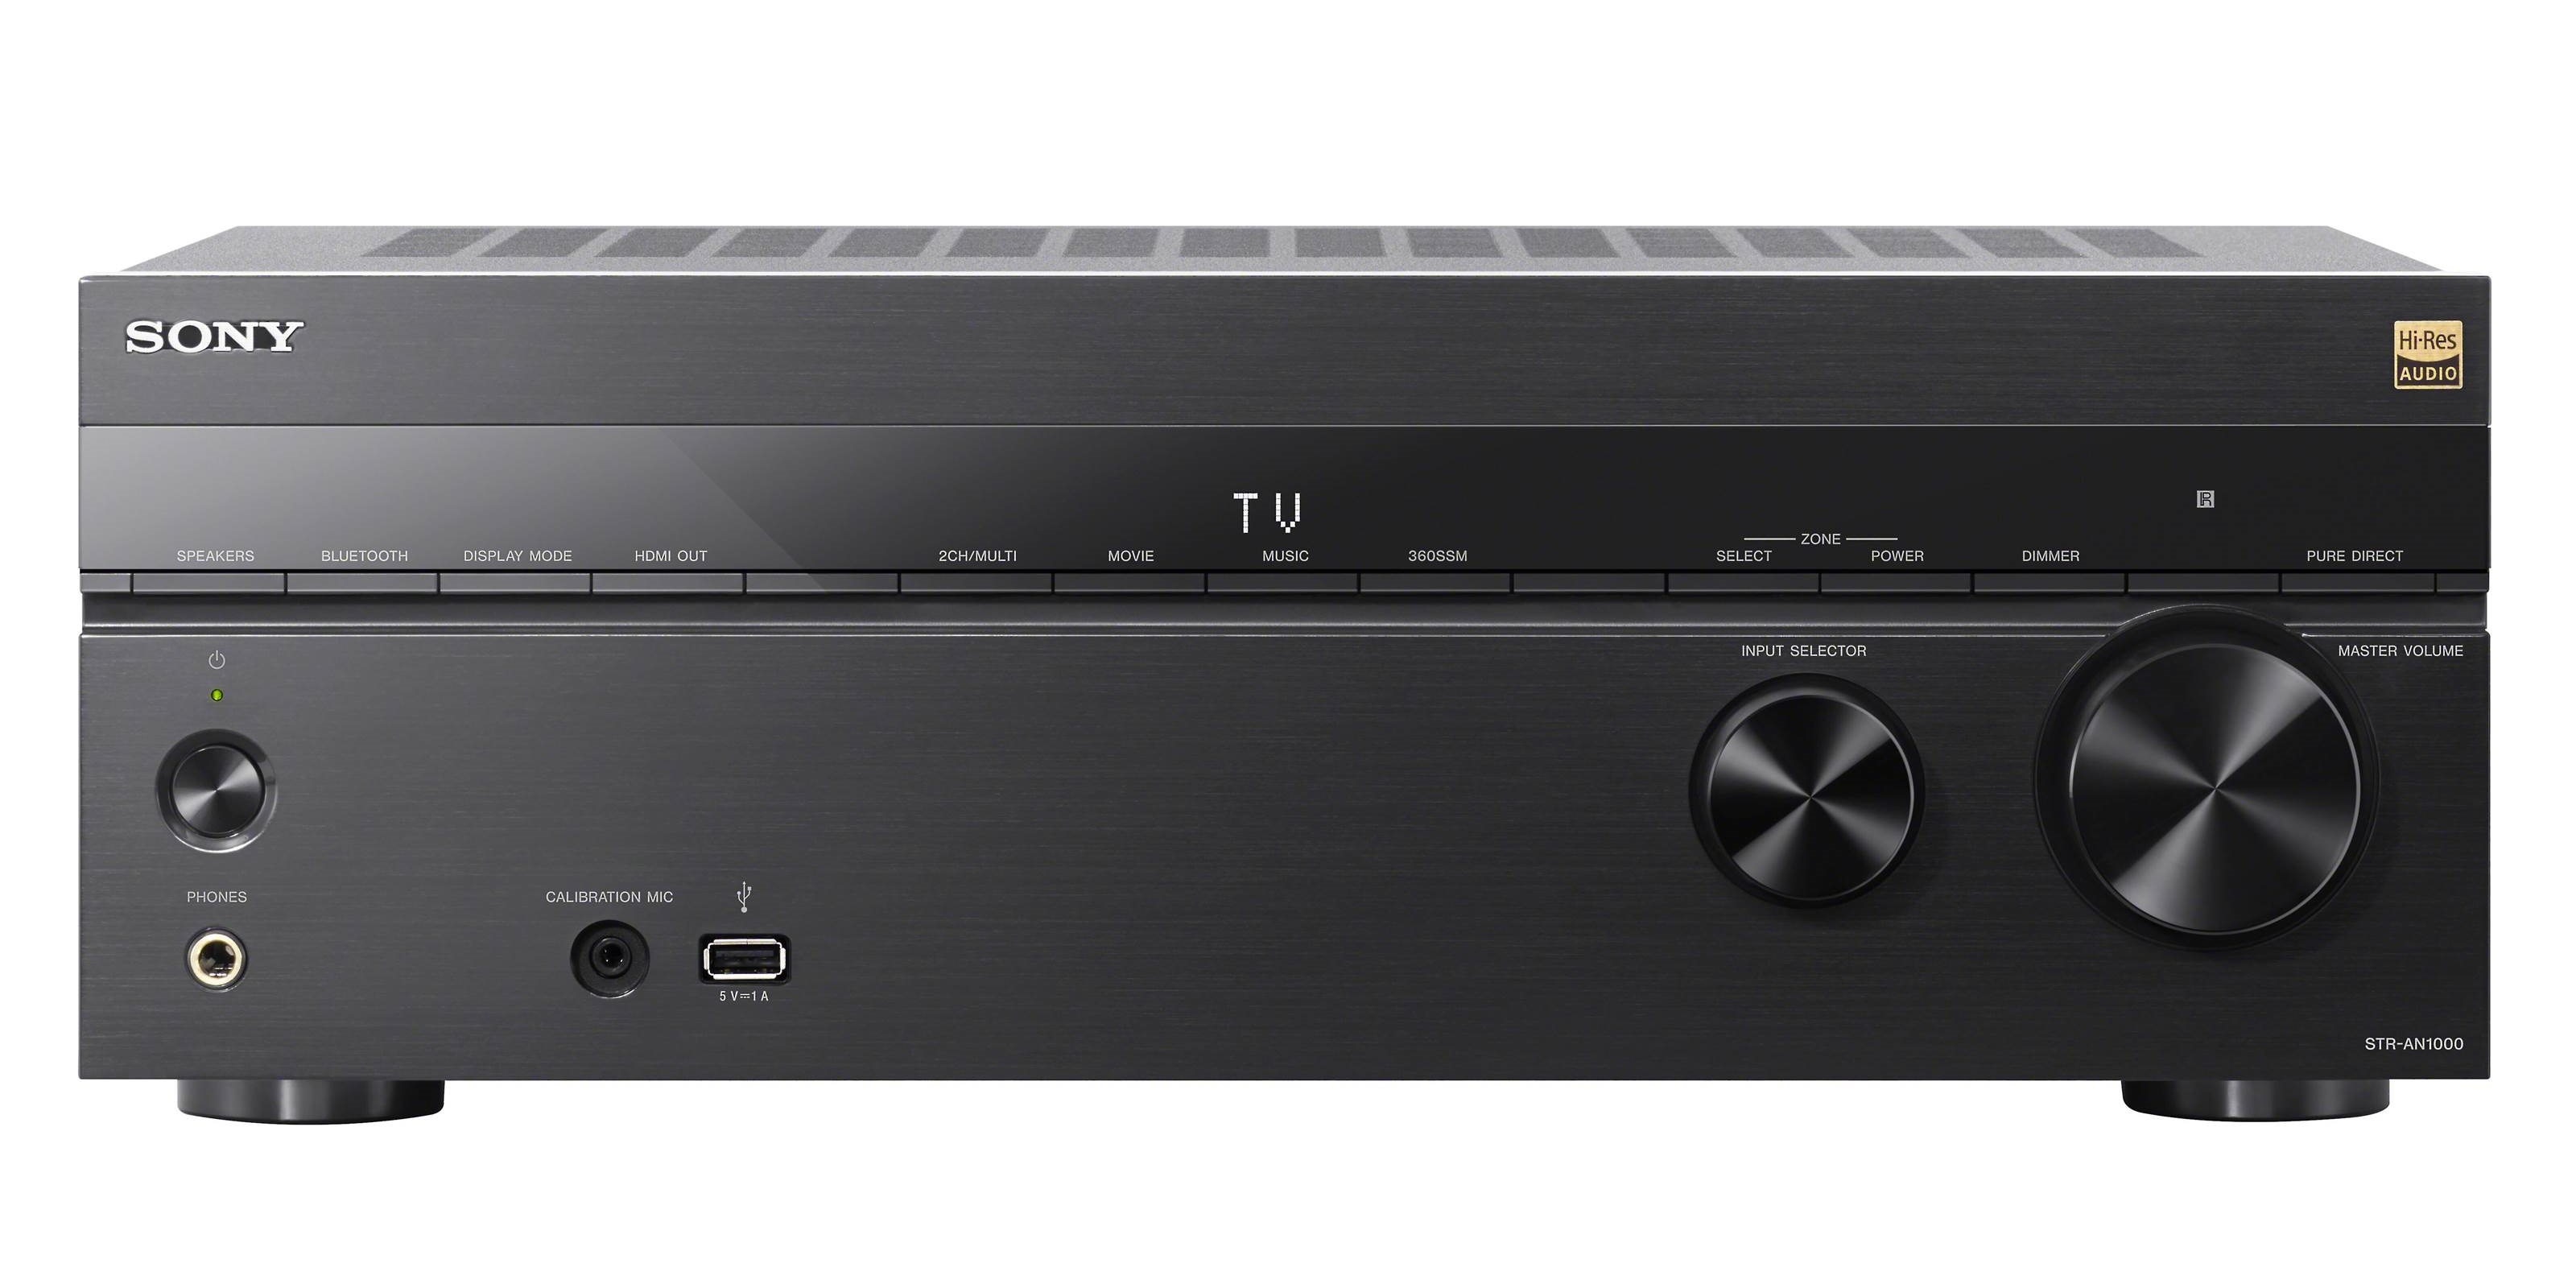 Ligatie Vergoeding beloning Sony onthult STR AN1000 en nog vier andere nieuwe AV receivers